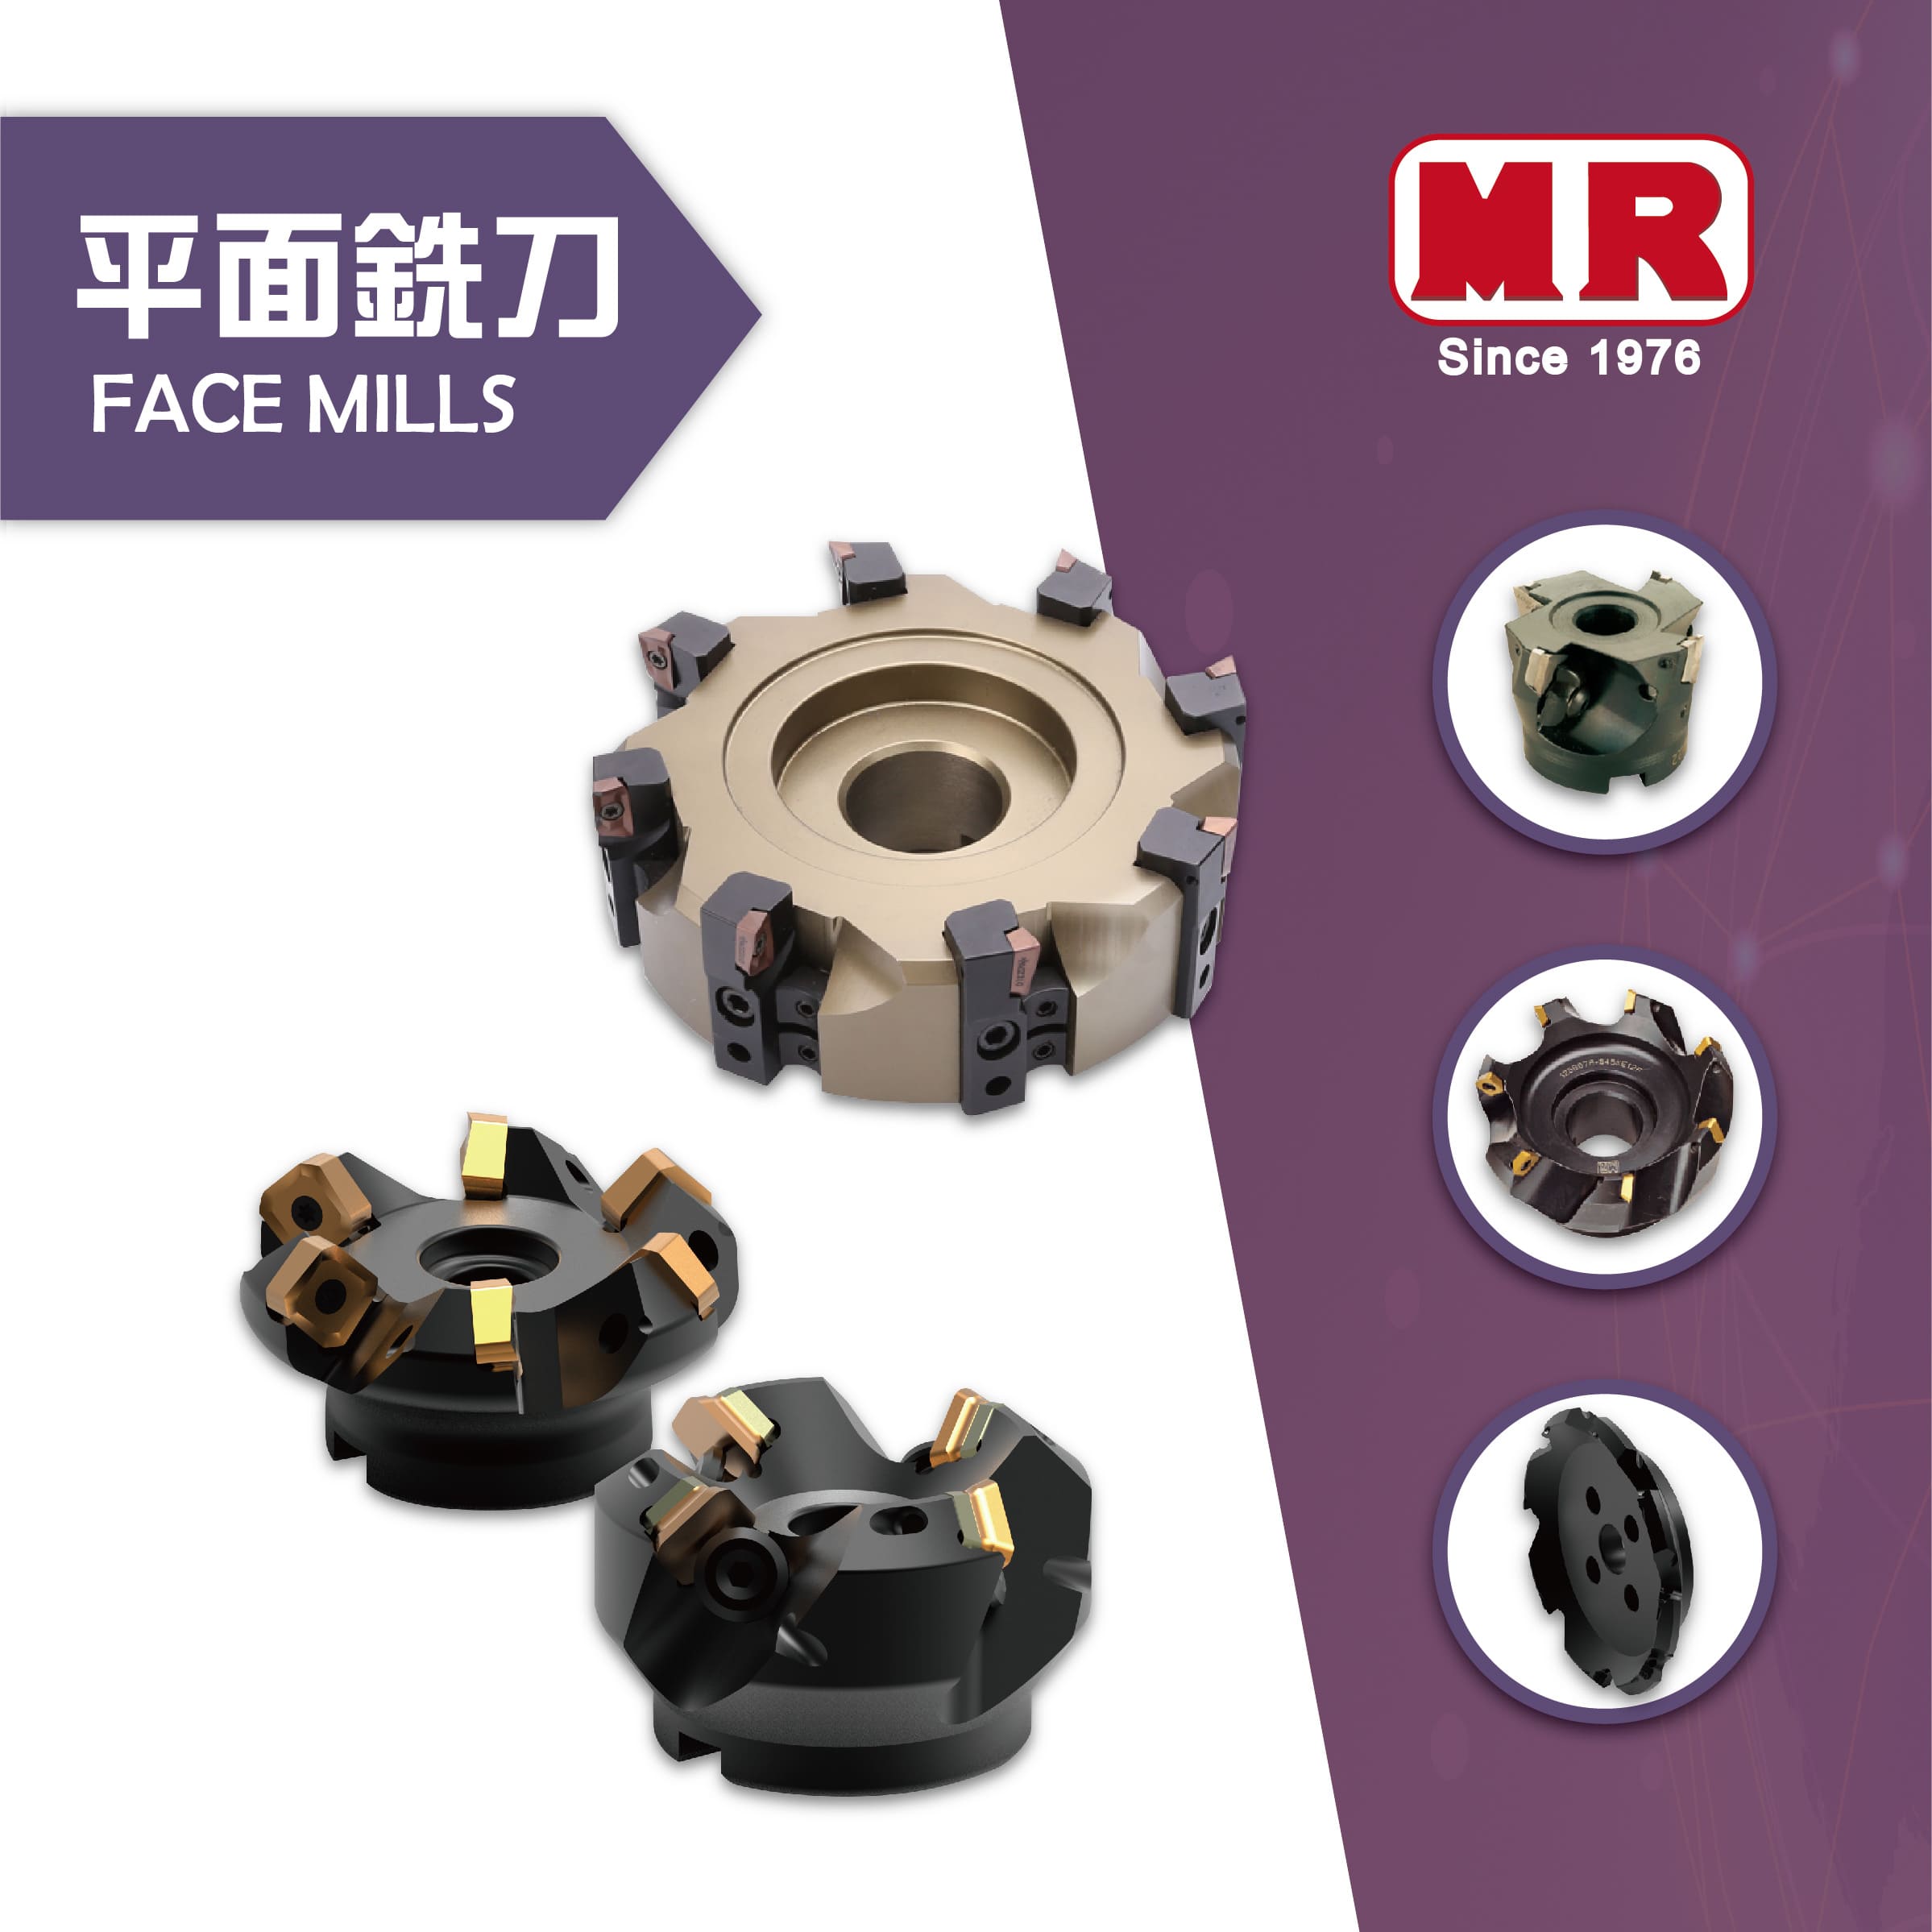 Face mills